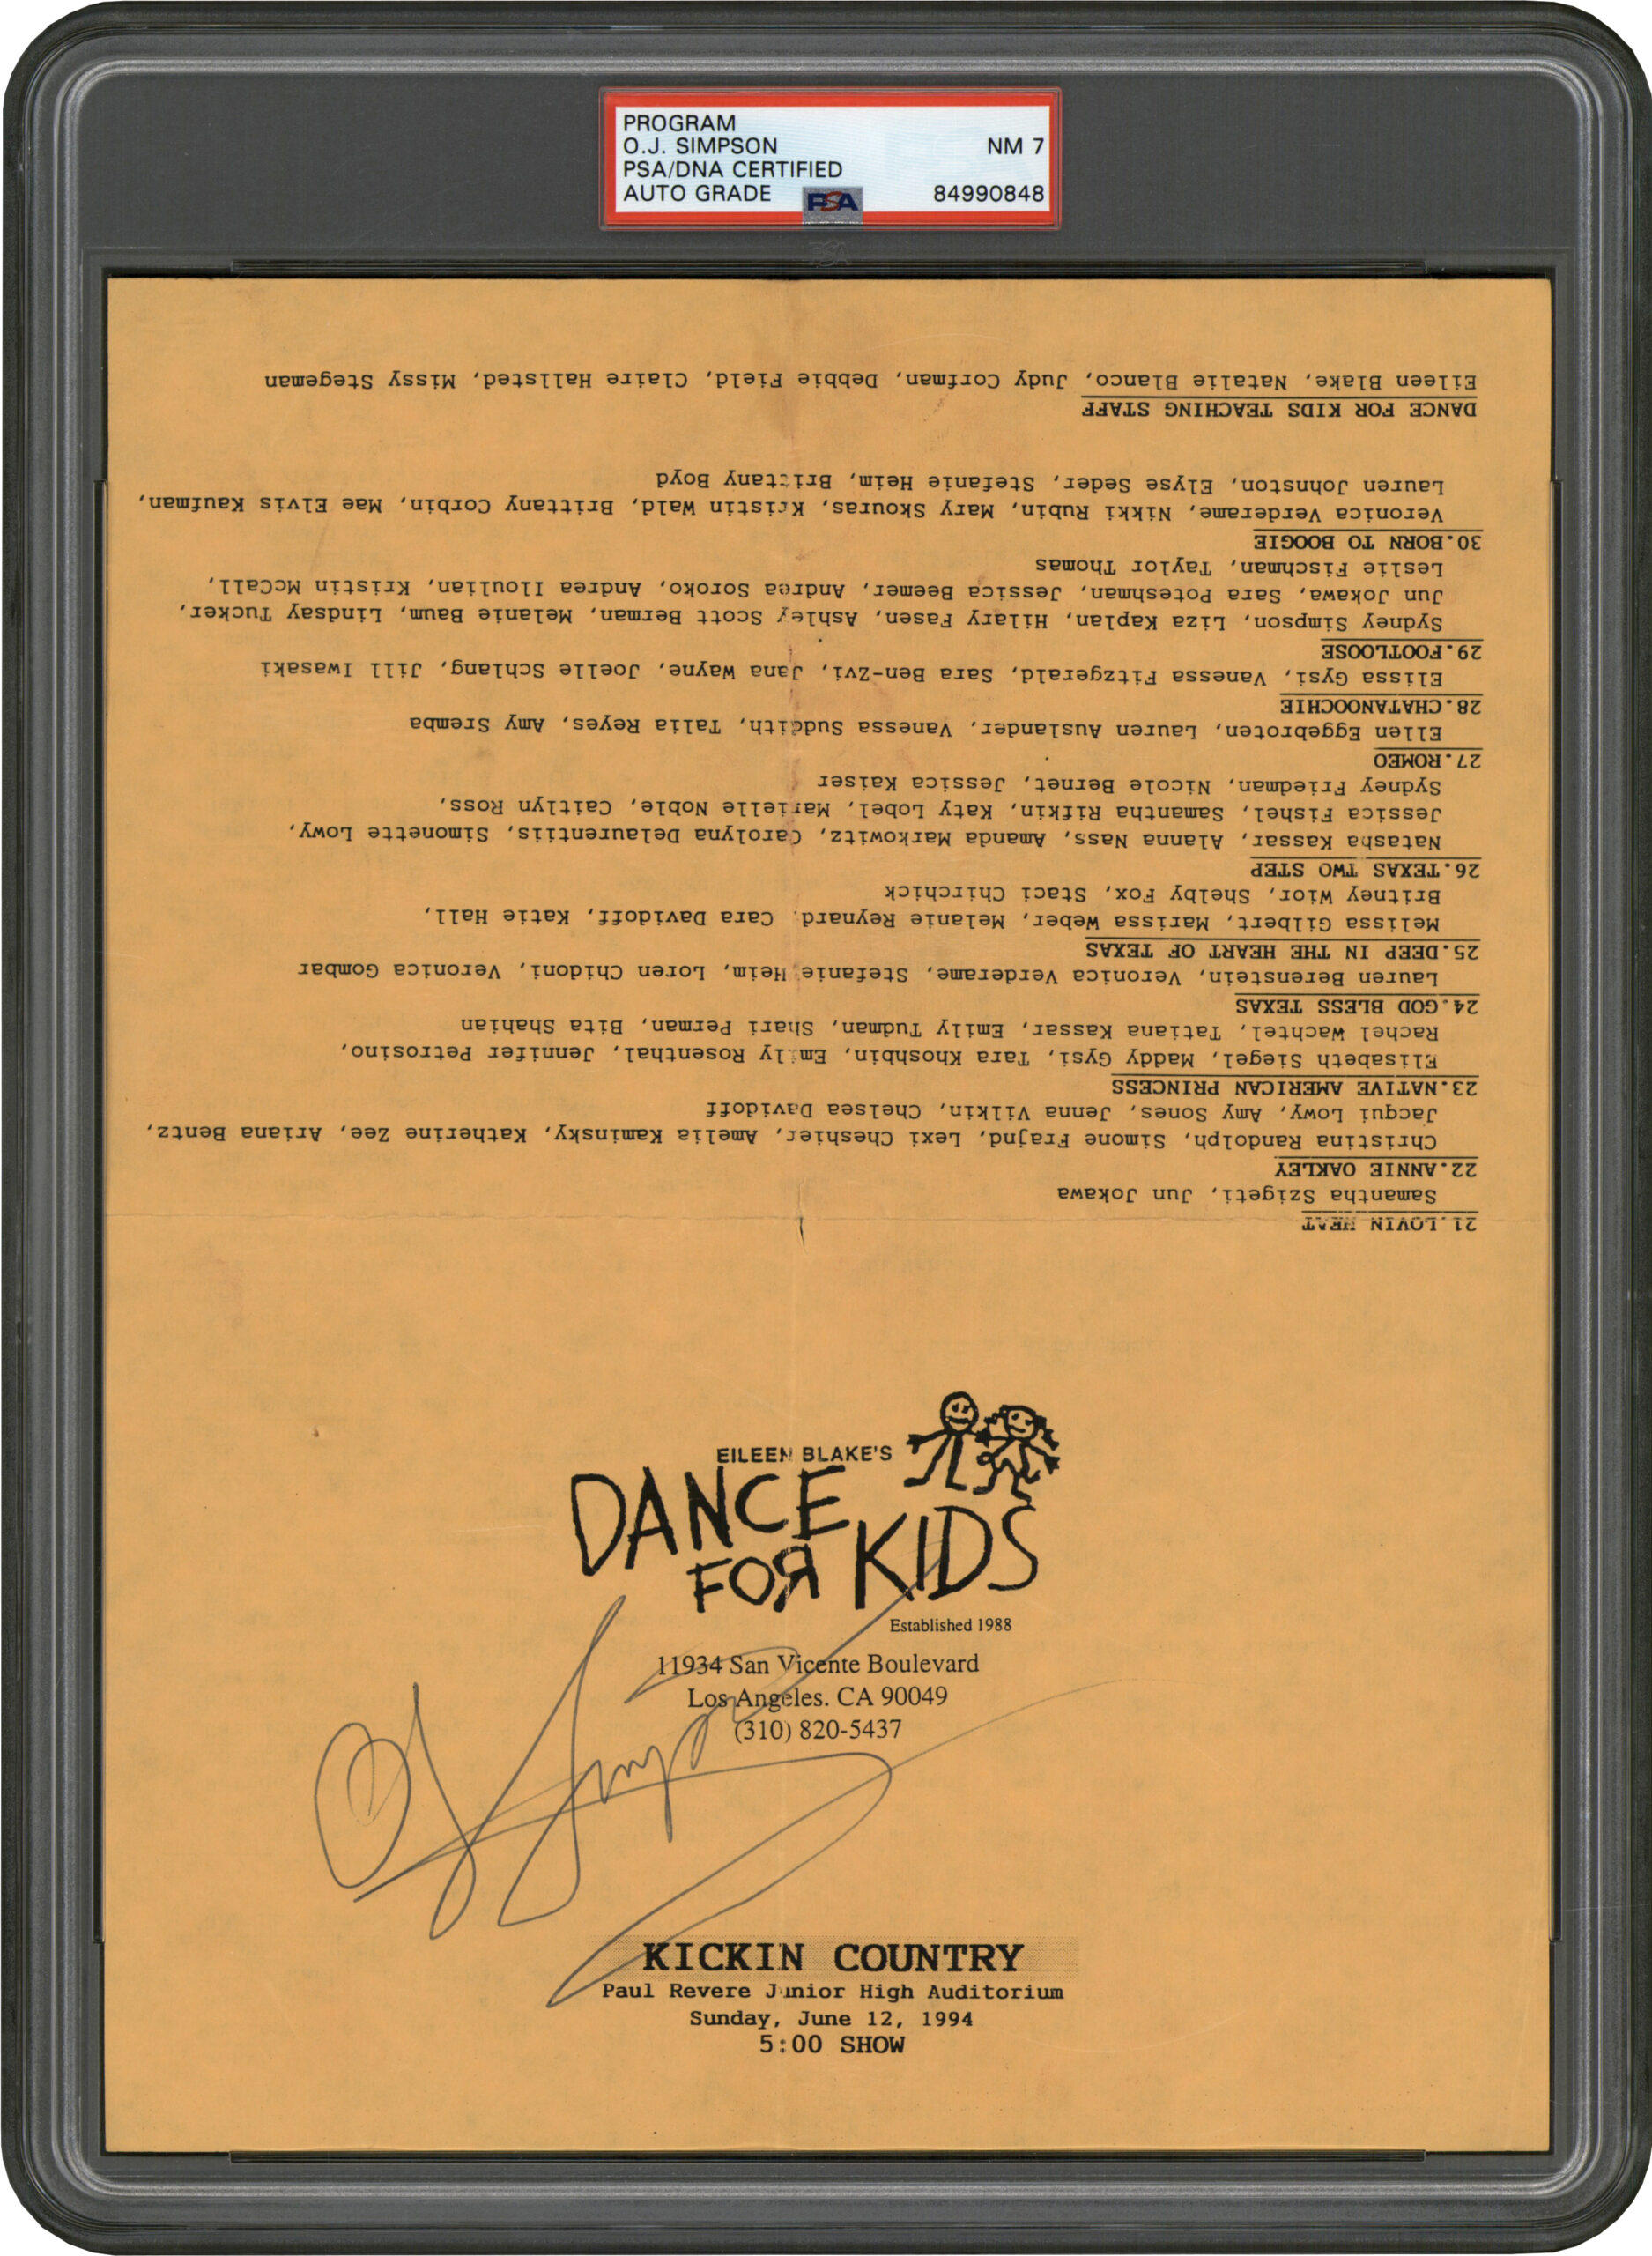 Signed O.J. Simpson dance recital program